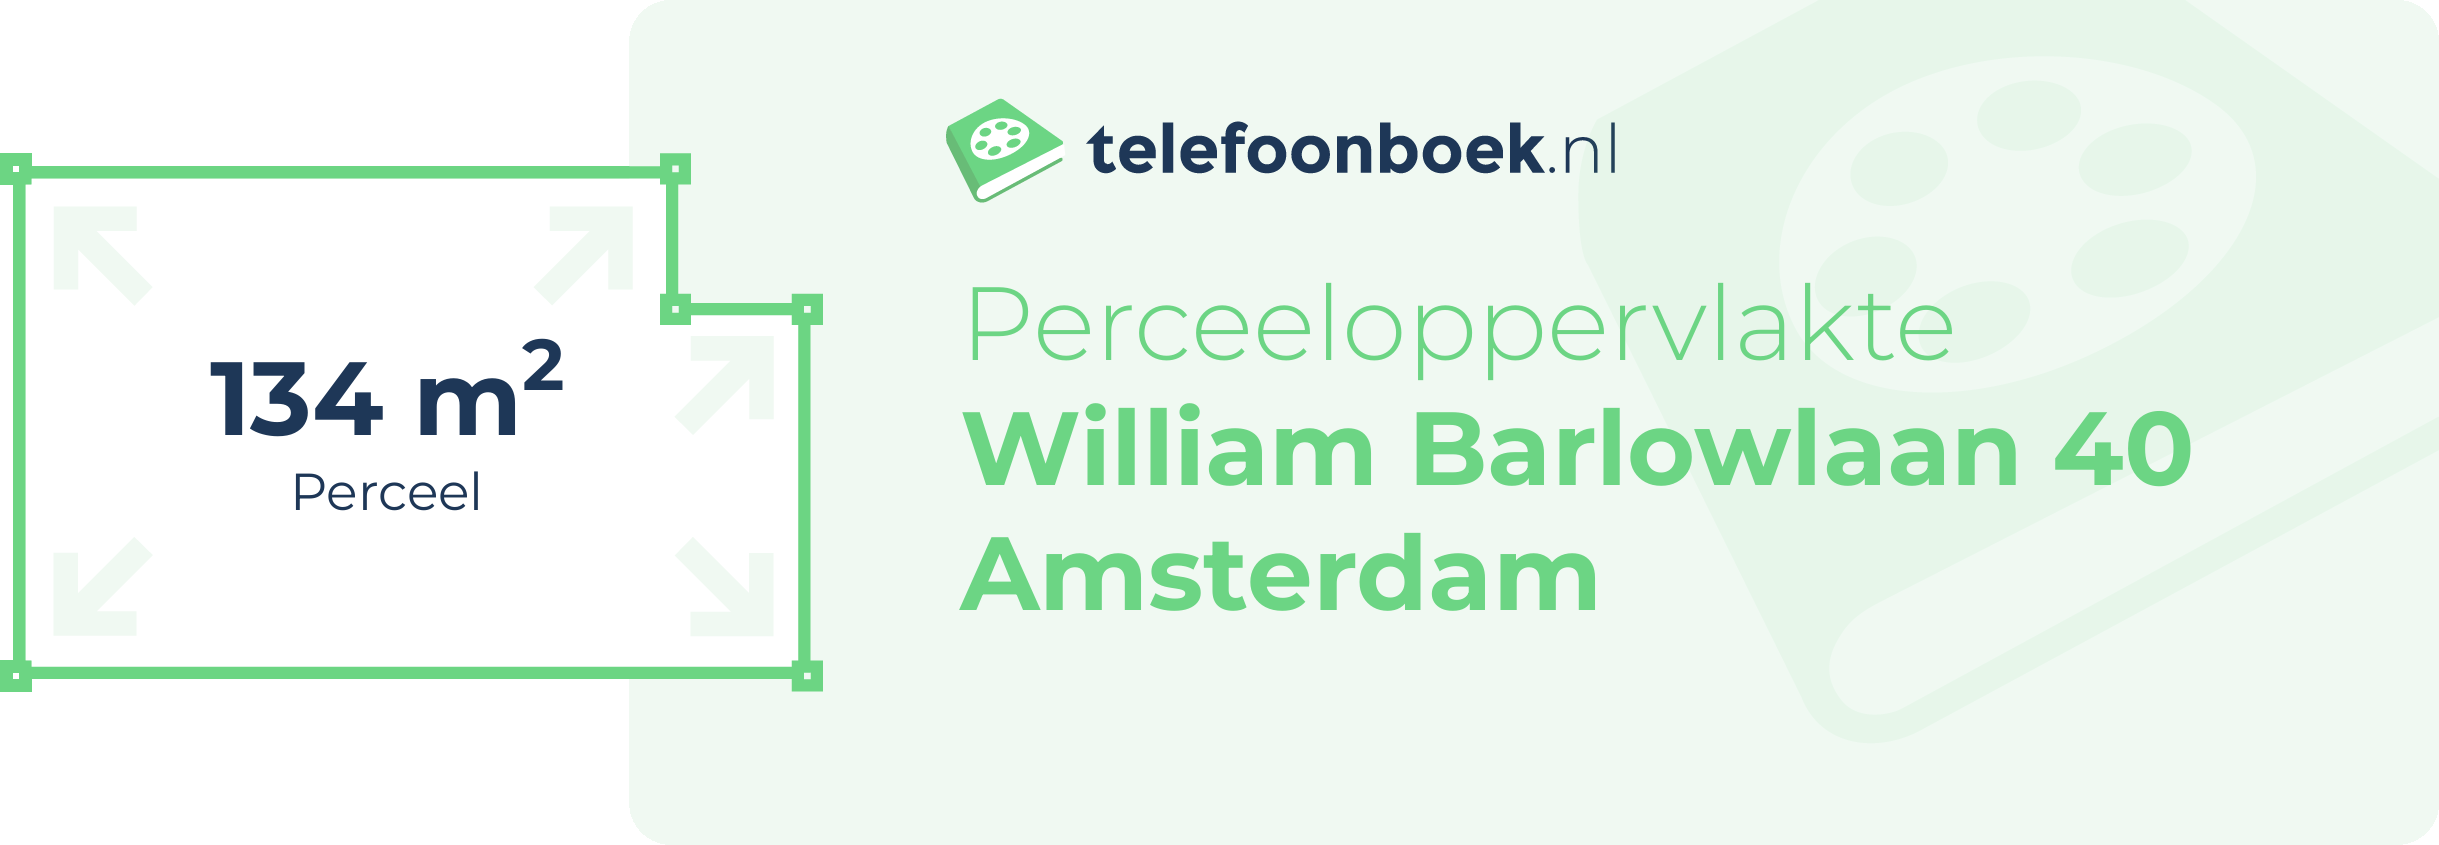 Perceeloppervlakte William Barlowlaan 40 Amsterdam